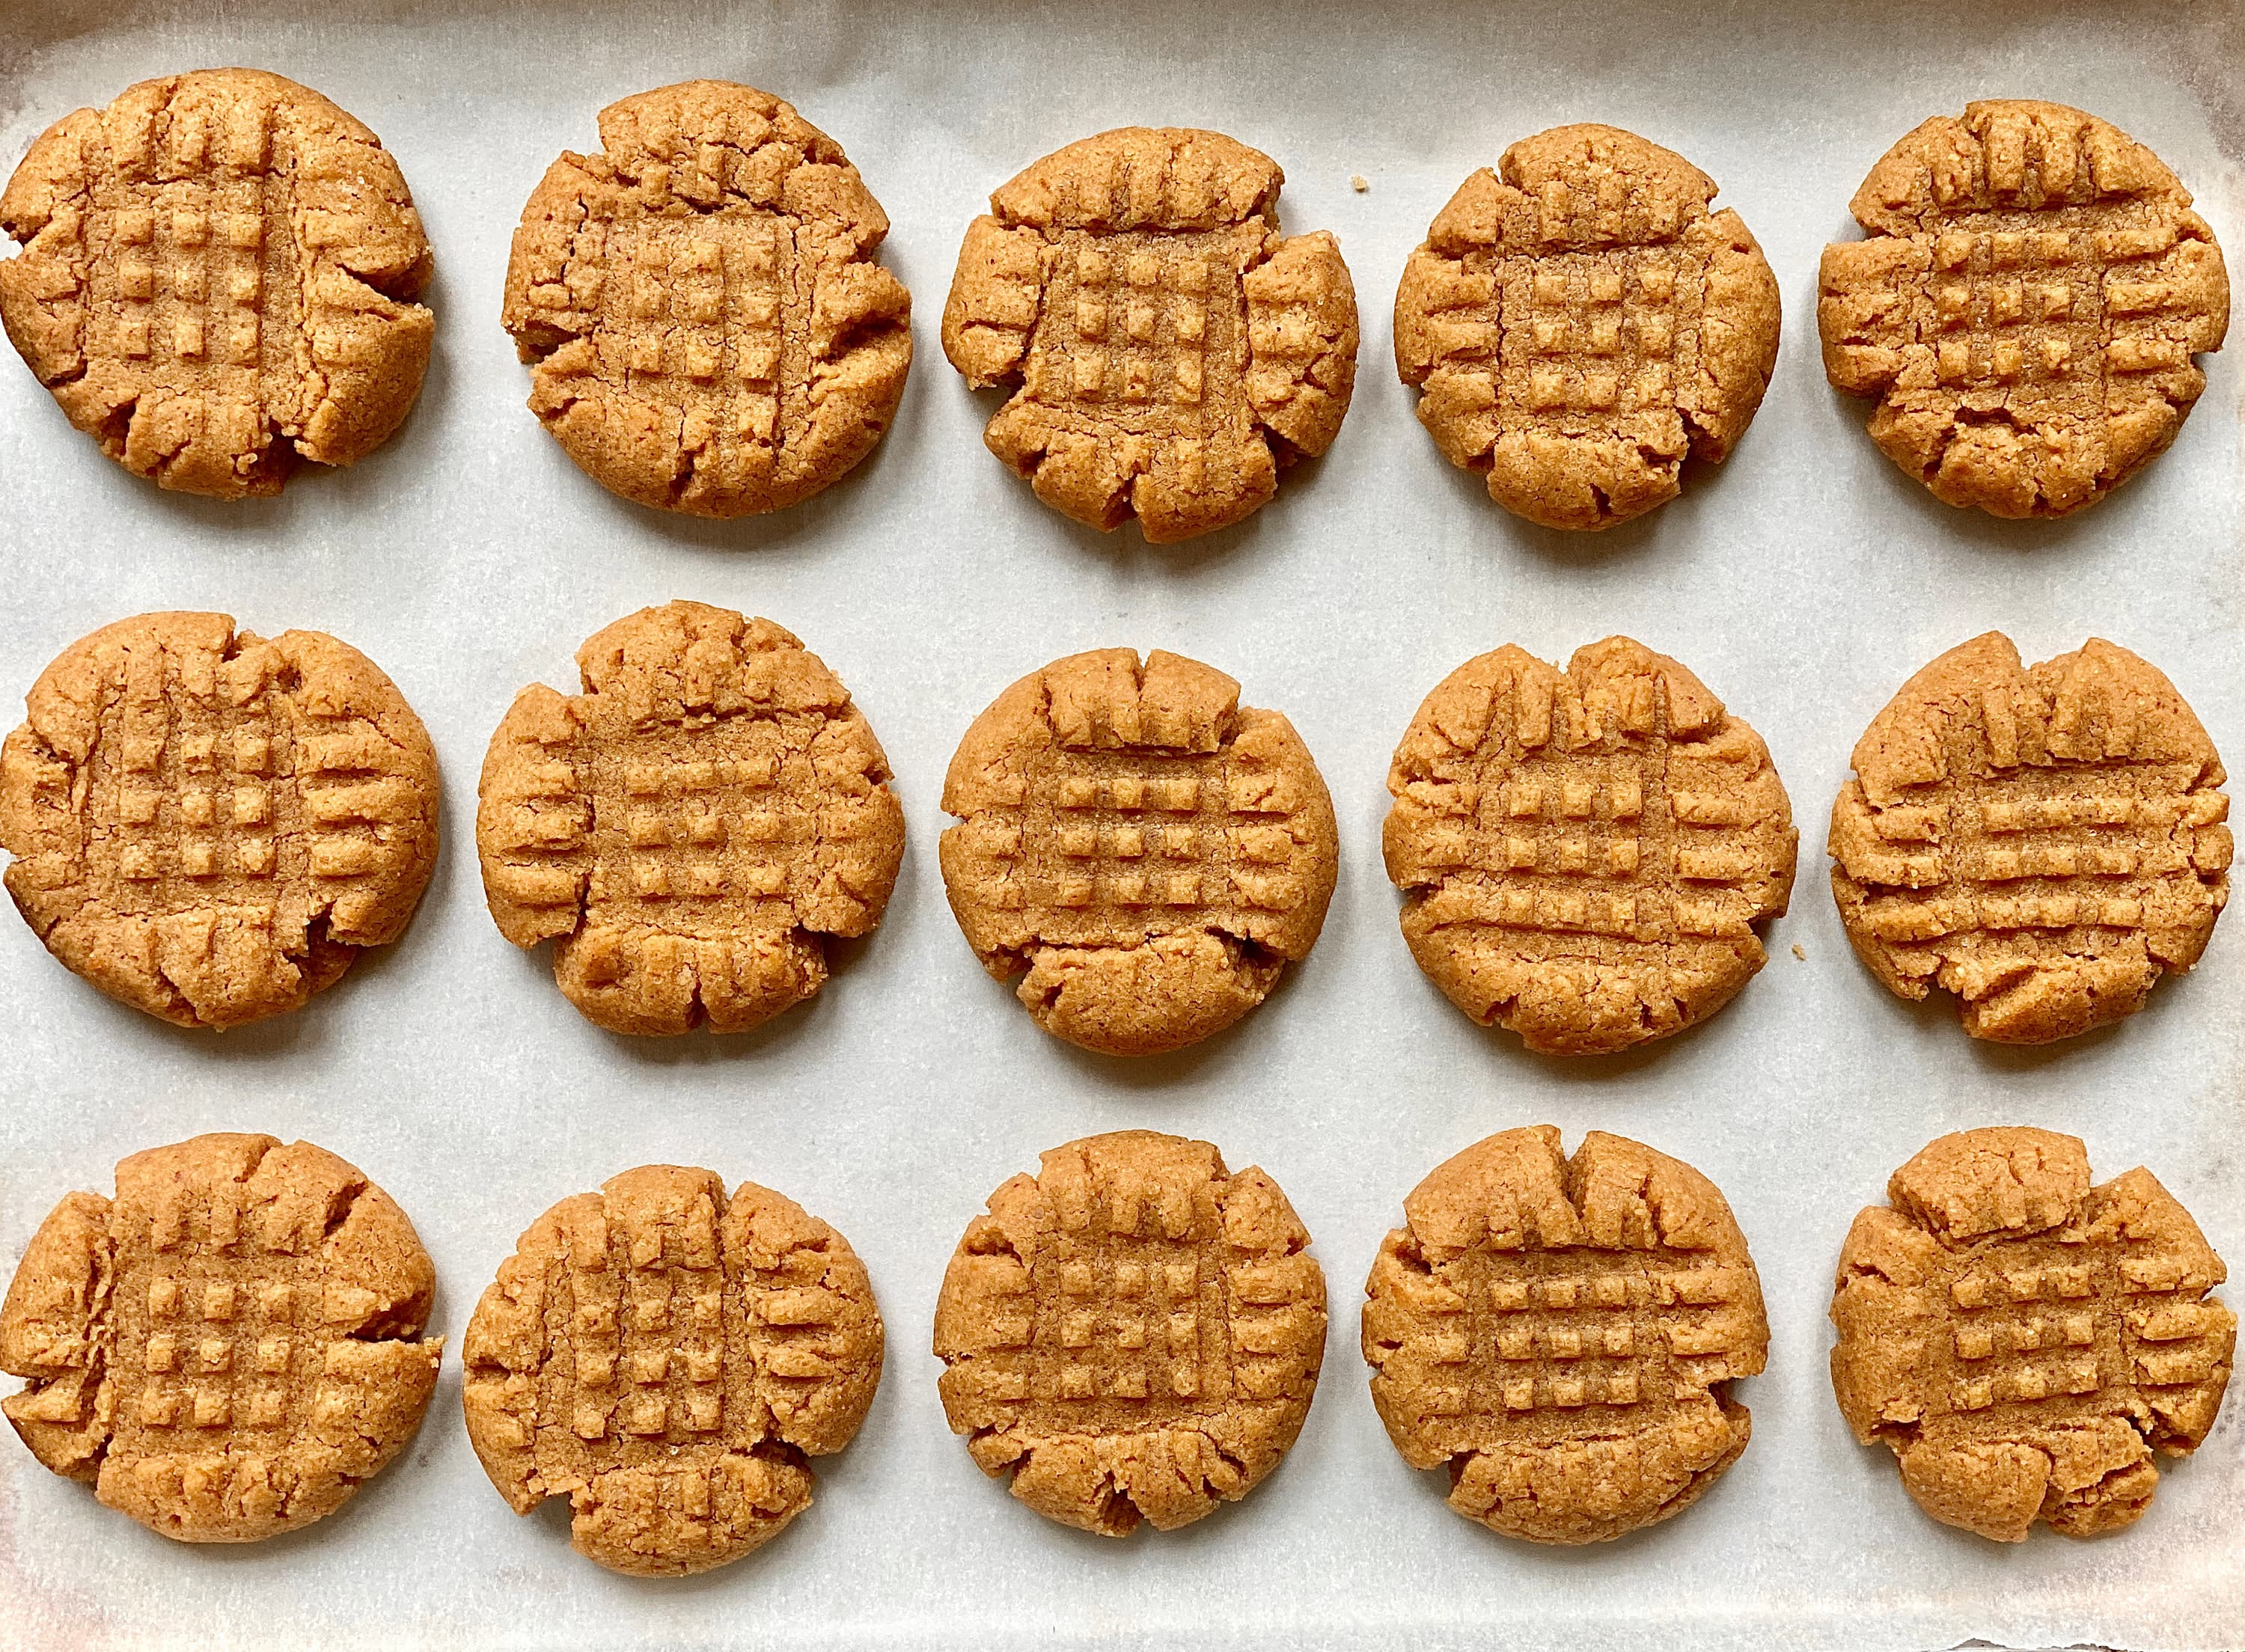 3-Ingredient Peanut Butter Cookies - Eating Bird Food